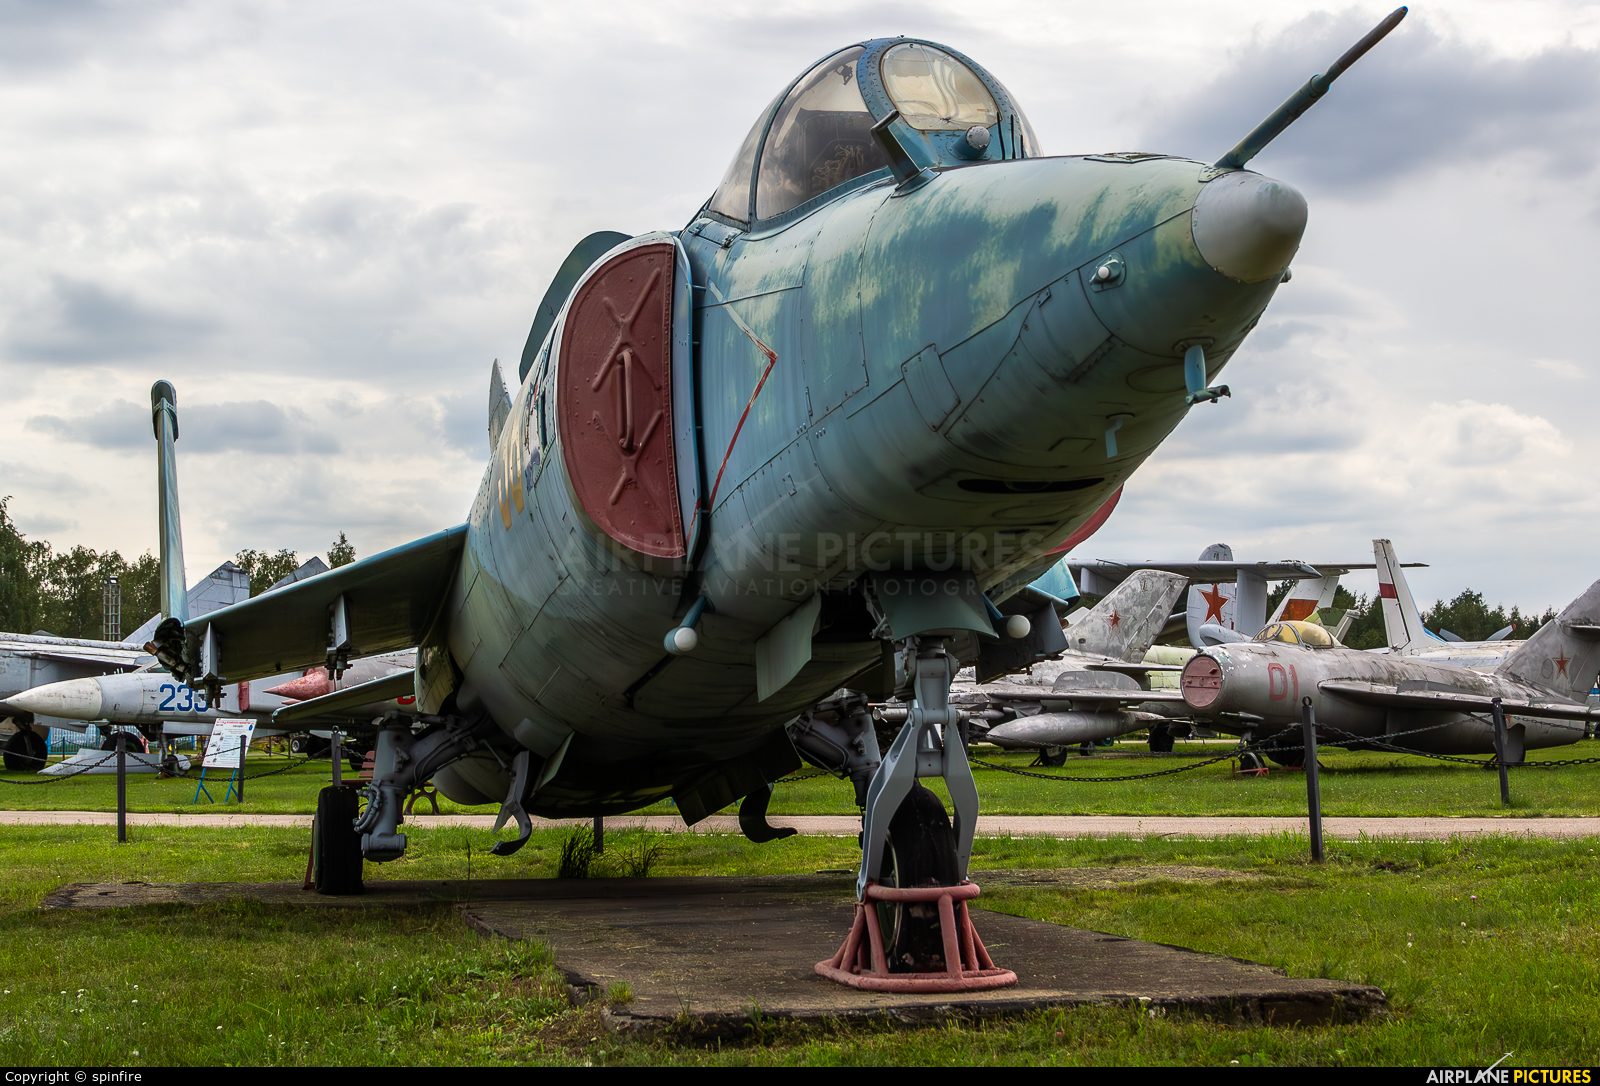 Yakovlev Design Bureau 38 aircraft at Monino Russian Air Force museum